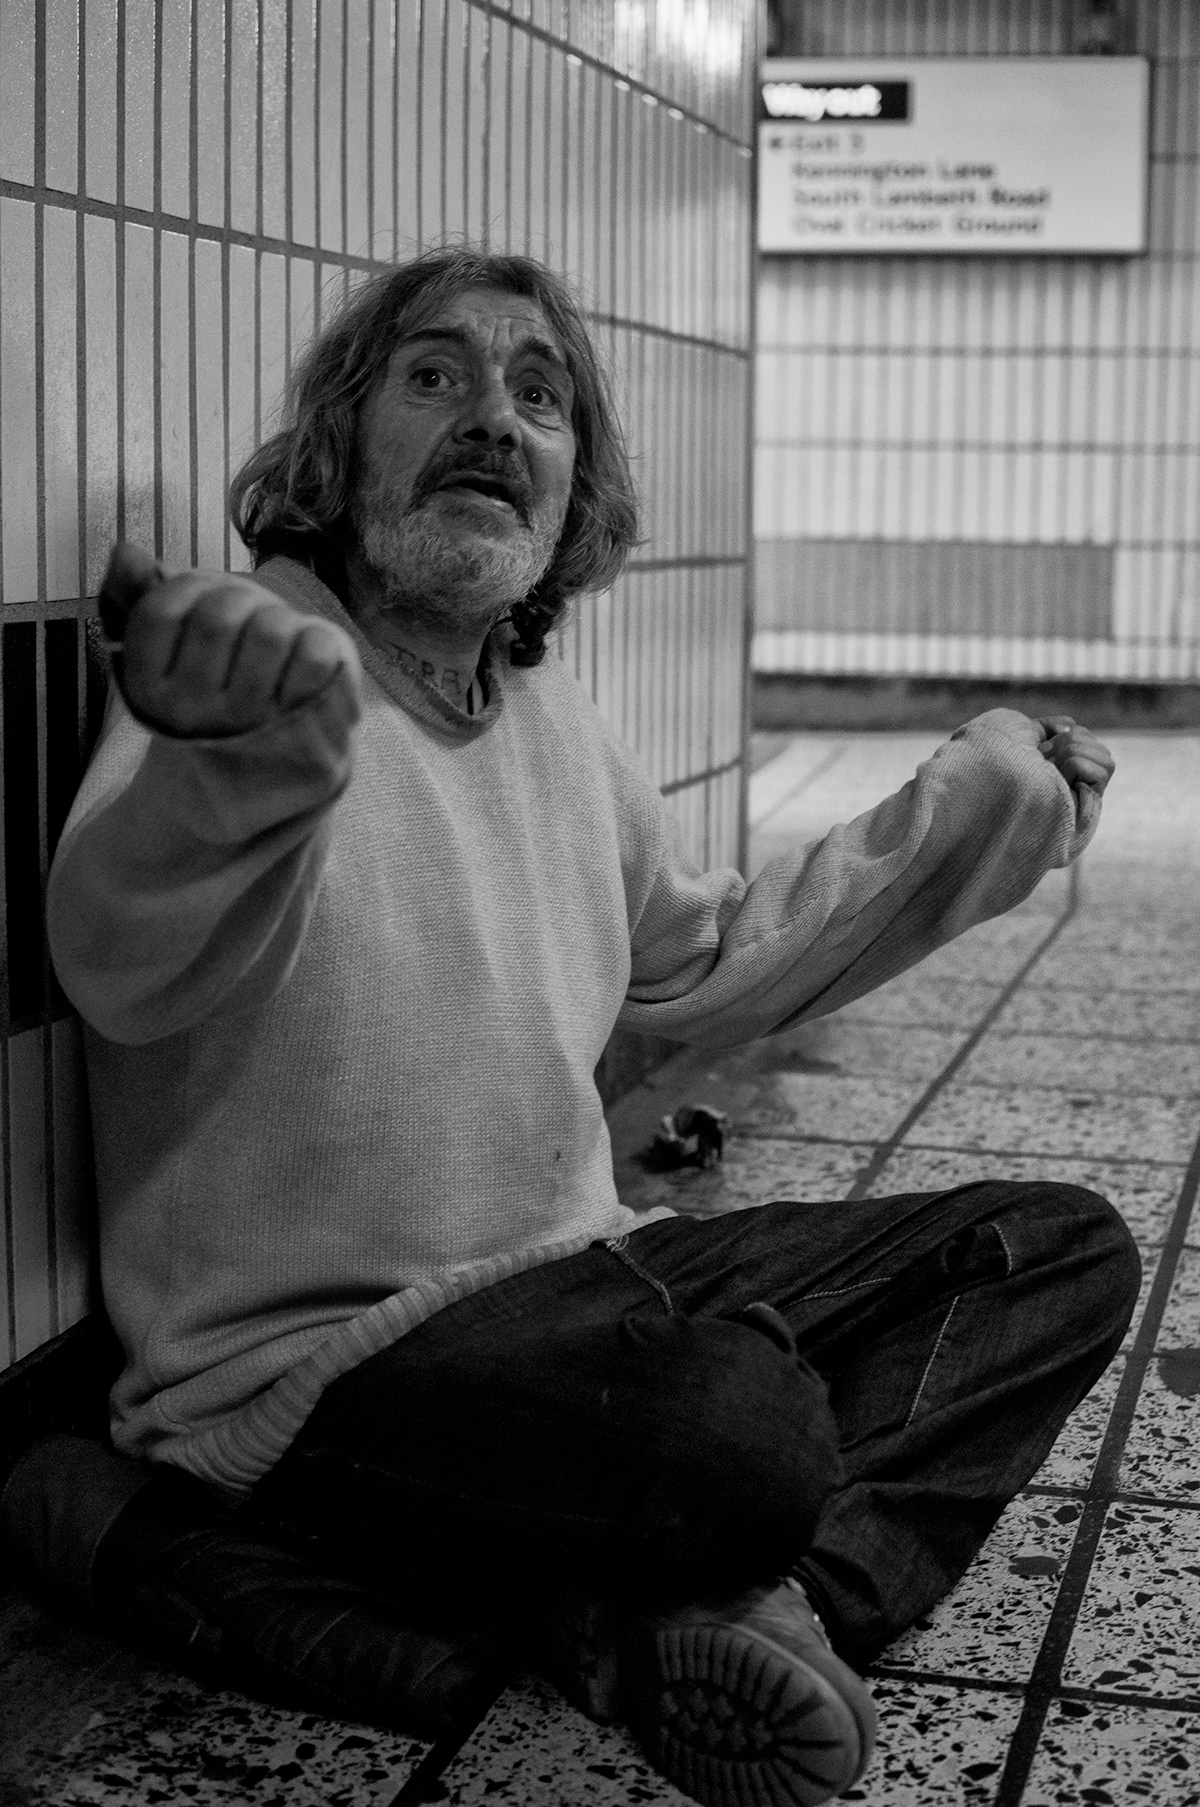 Street London homeless